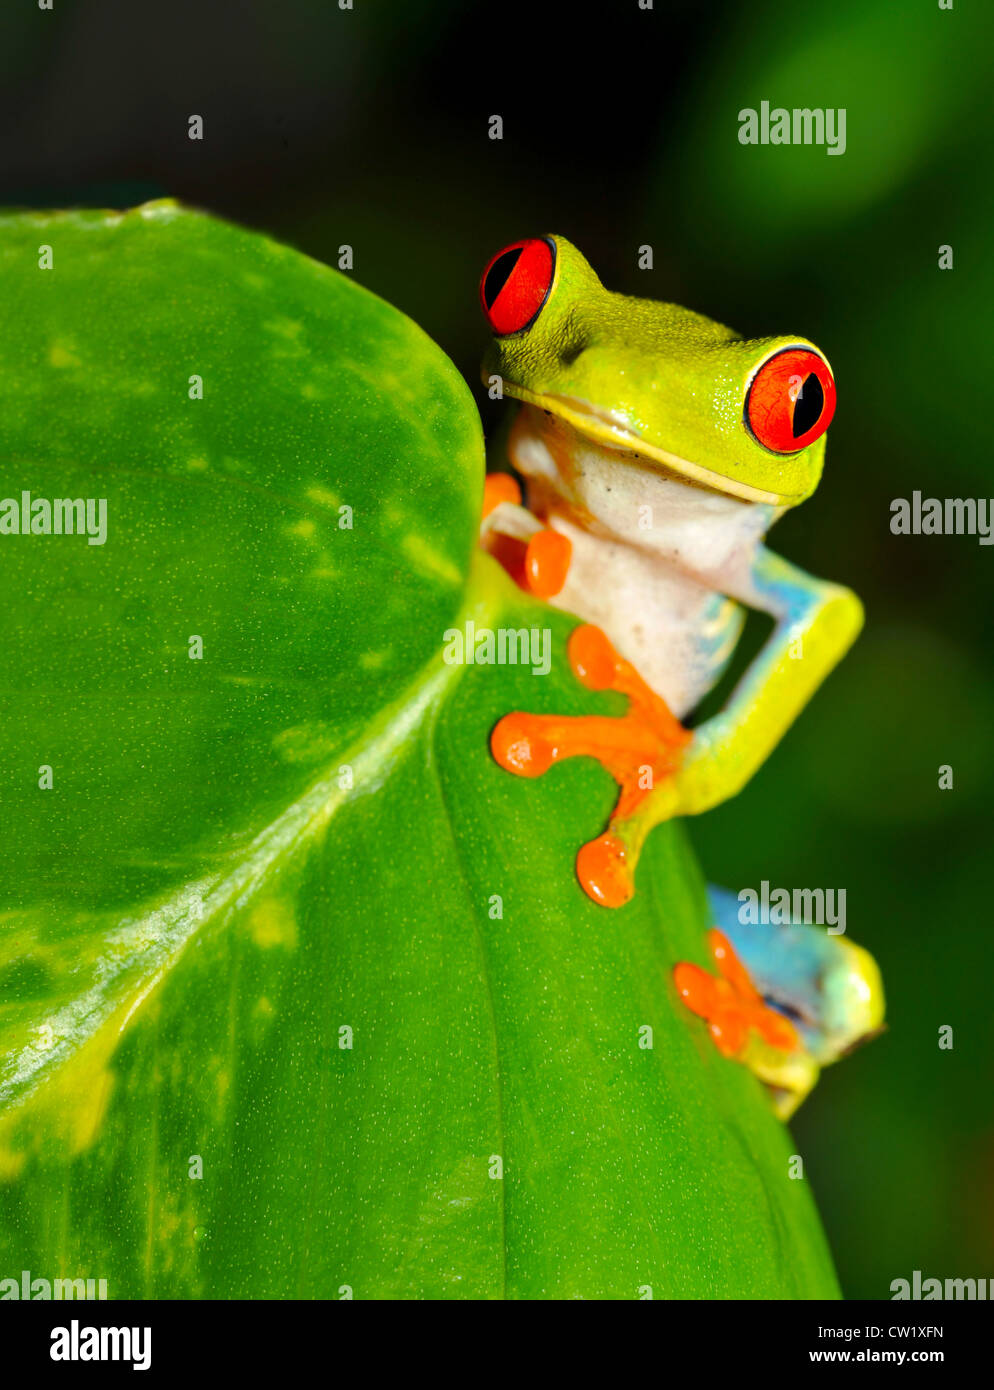 Ojos rojos árbol verde o de llamativa rana en hojas de banano, el lago Arenal, Costa rica, América Latina.exótica selva rainfrog anfibios Foto de stock